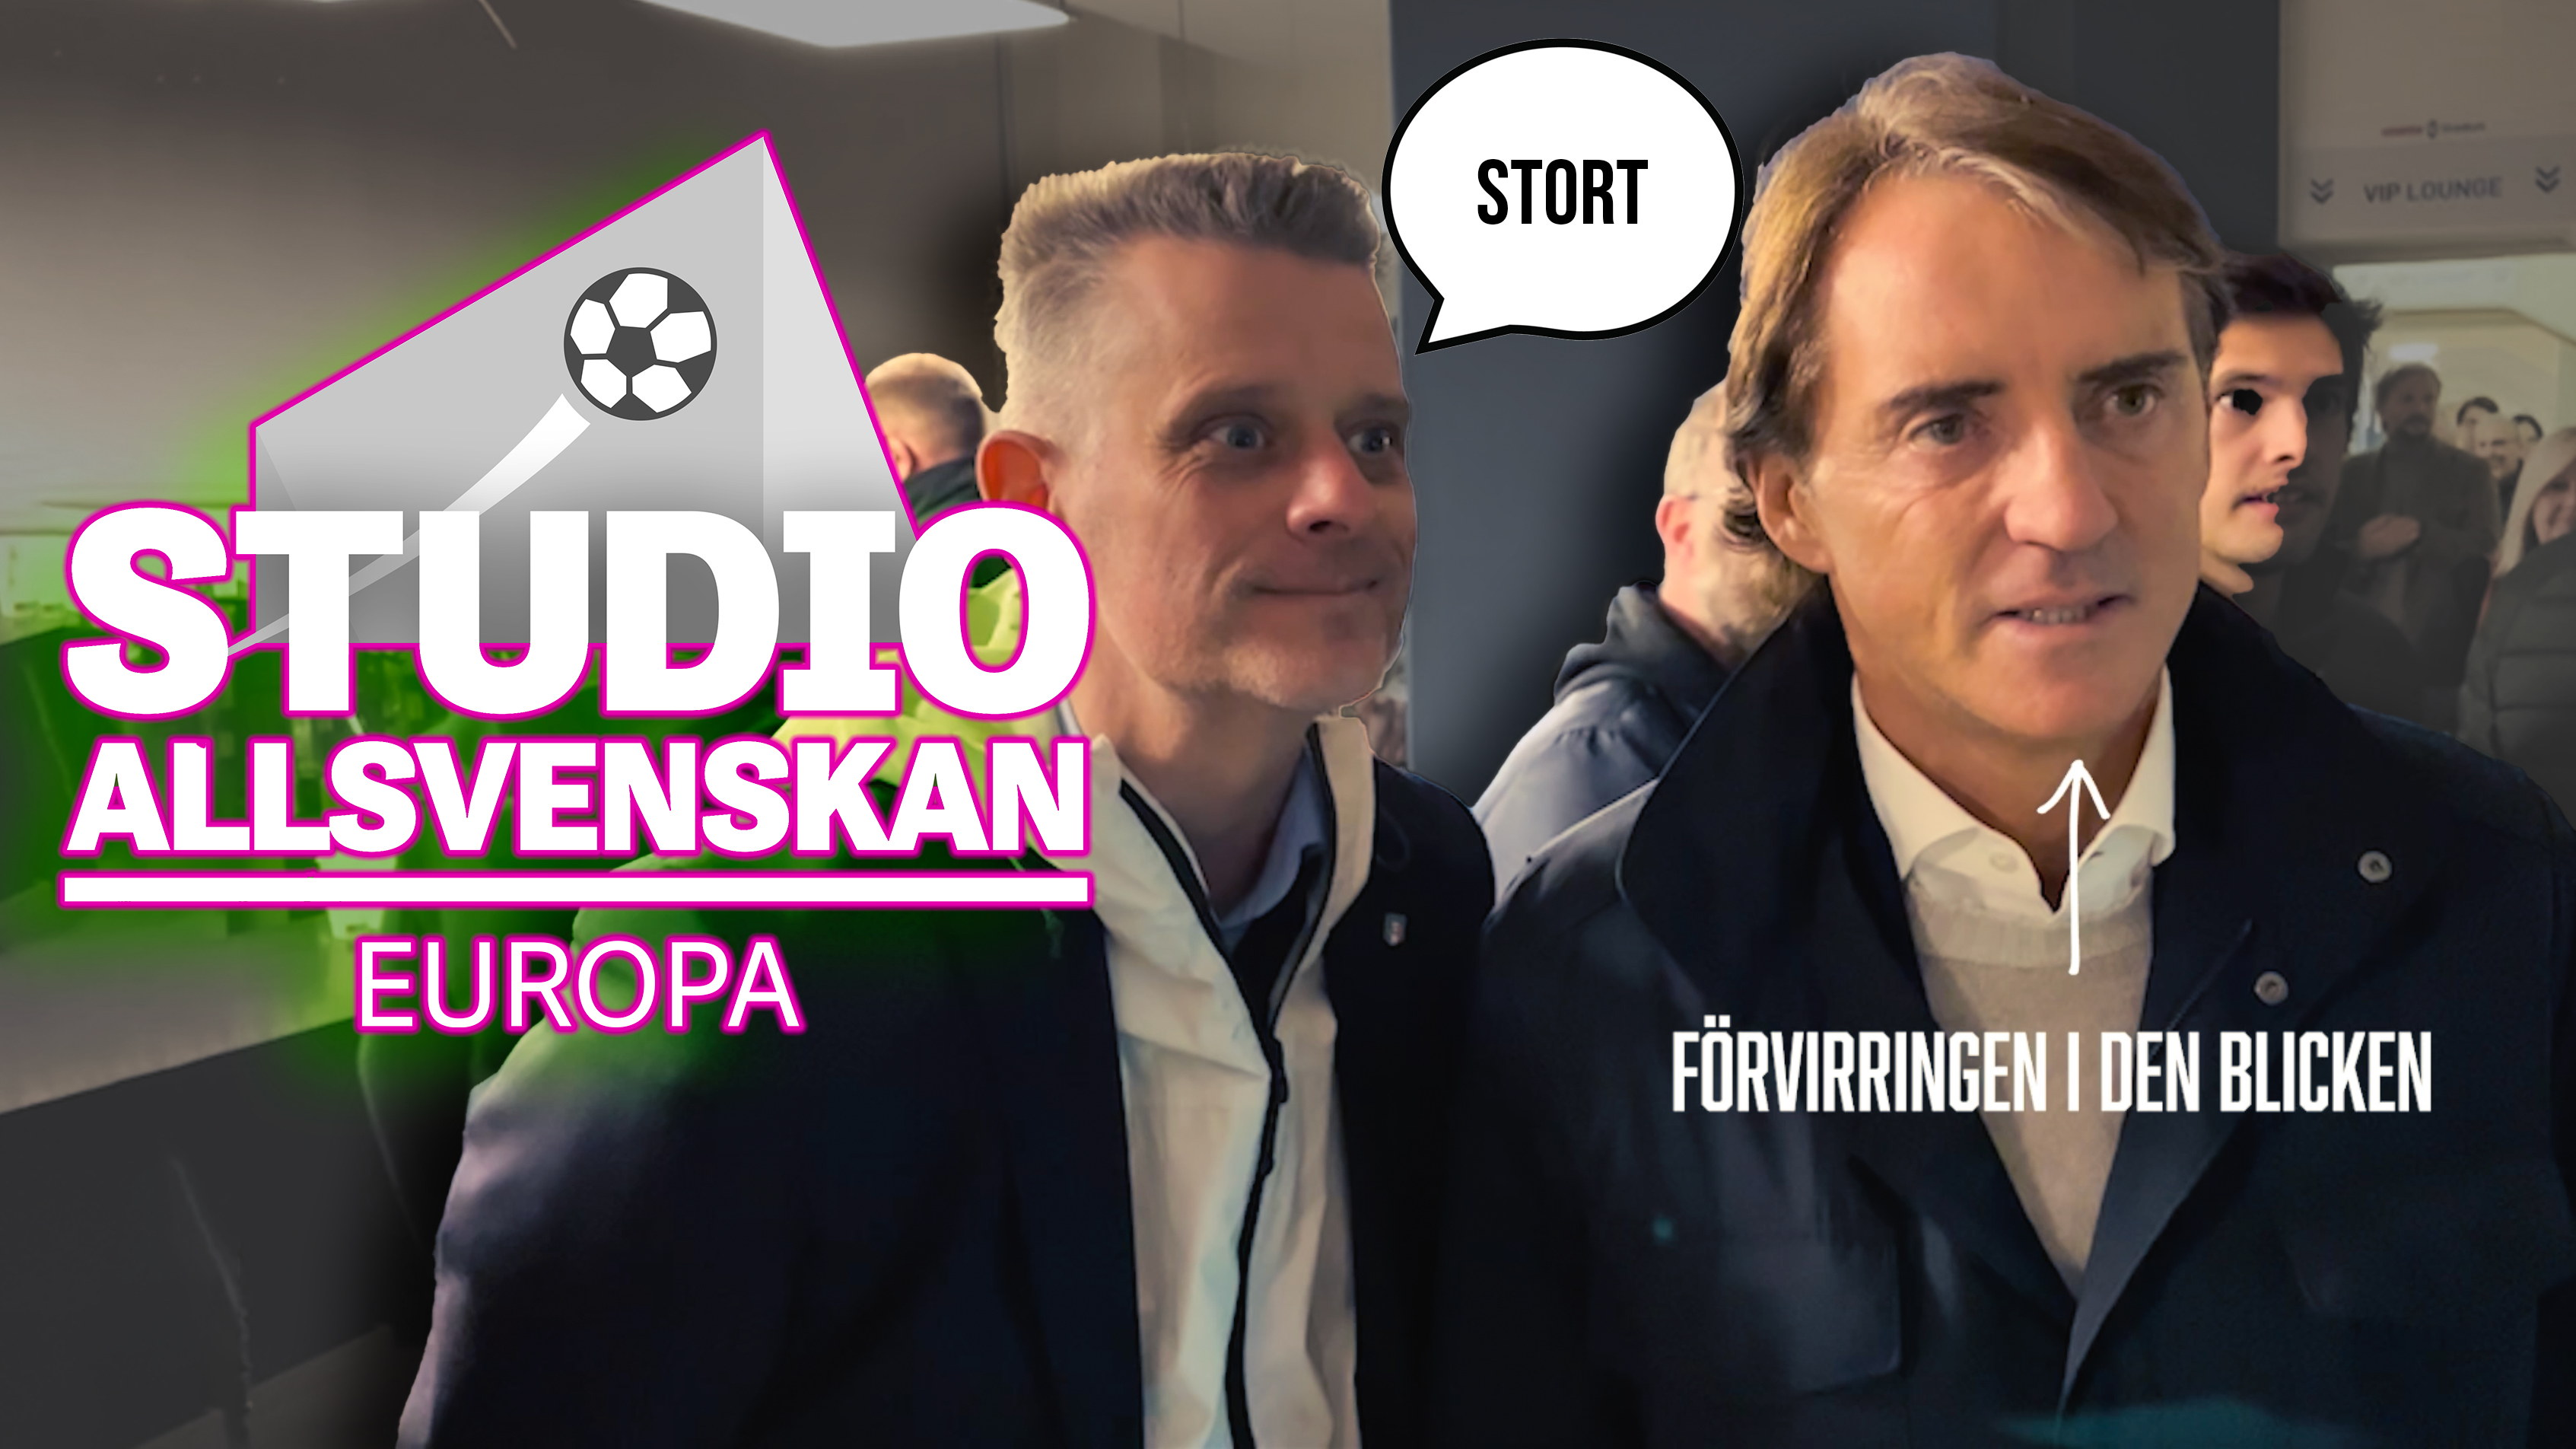 Studio Allsvenskan, Napoli, Marcus Birro, Studio Allsvenskan Europa, Atalanta, Roberto Mancini, serie a